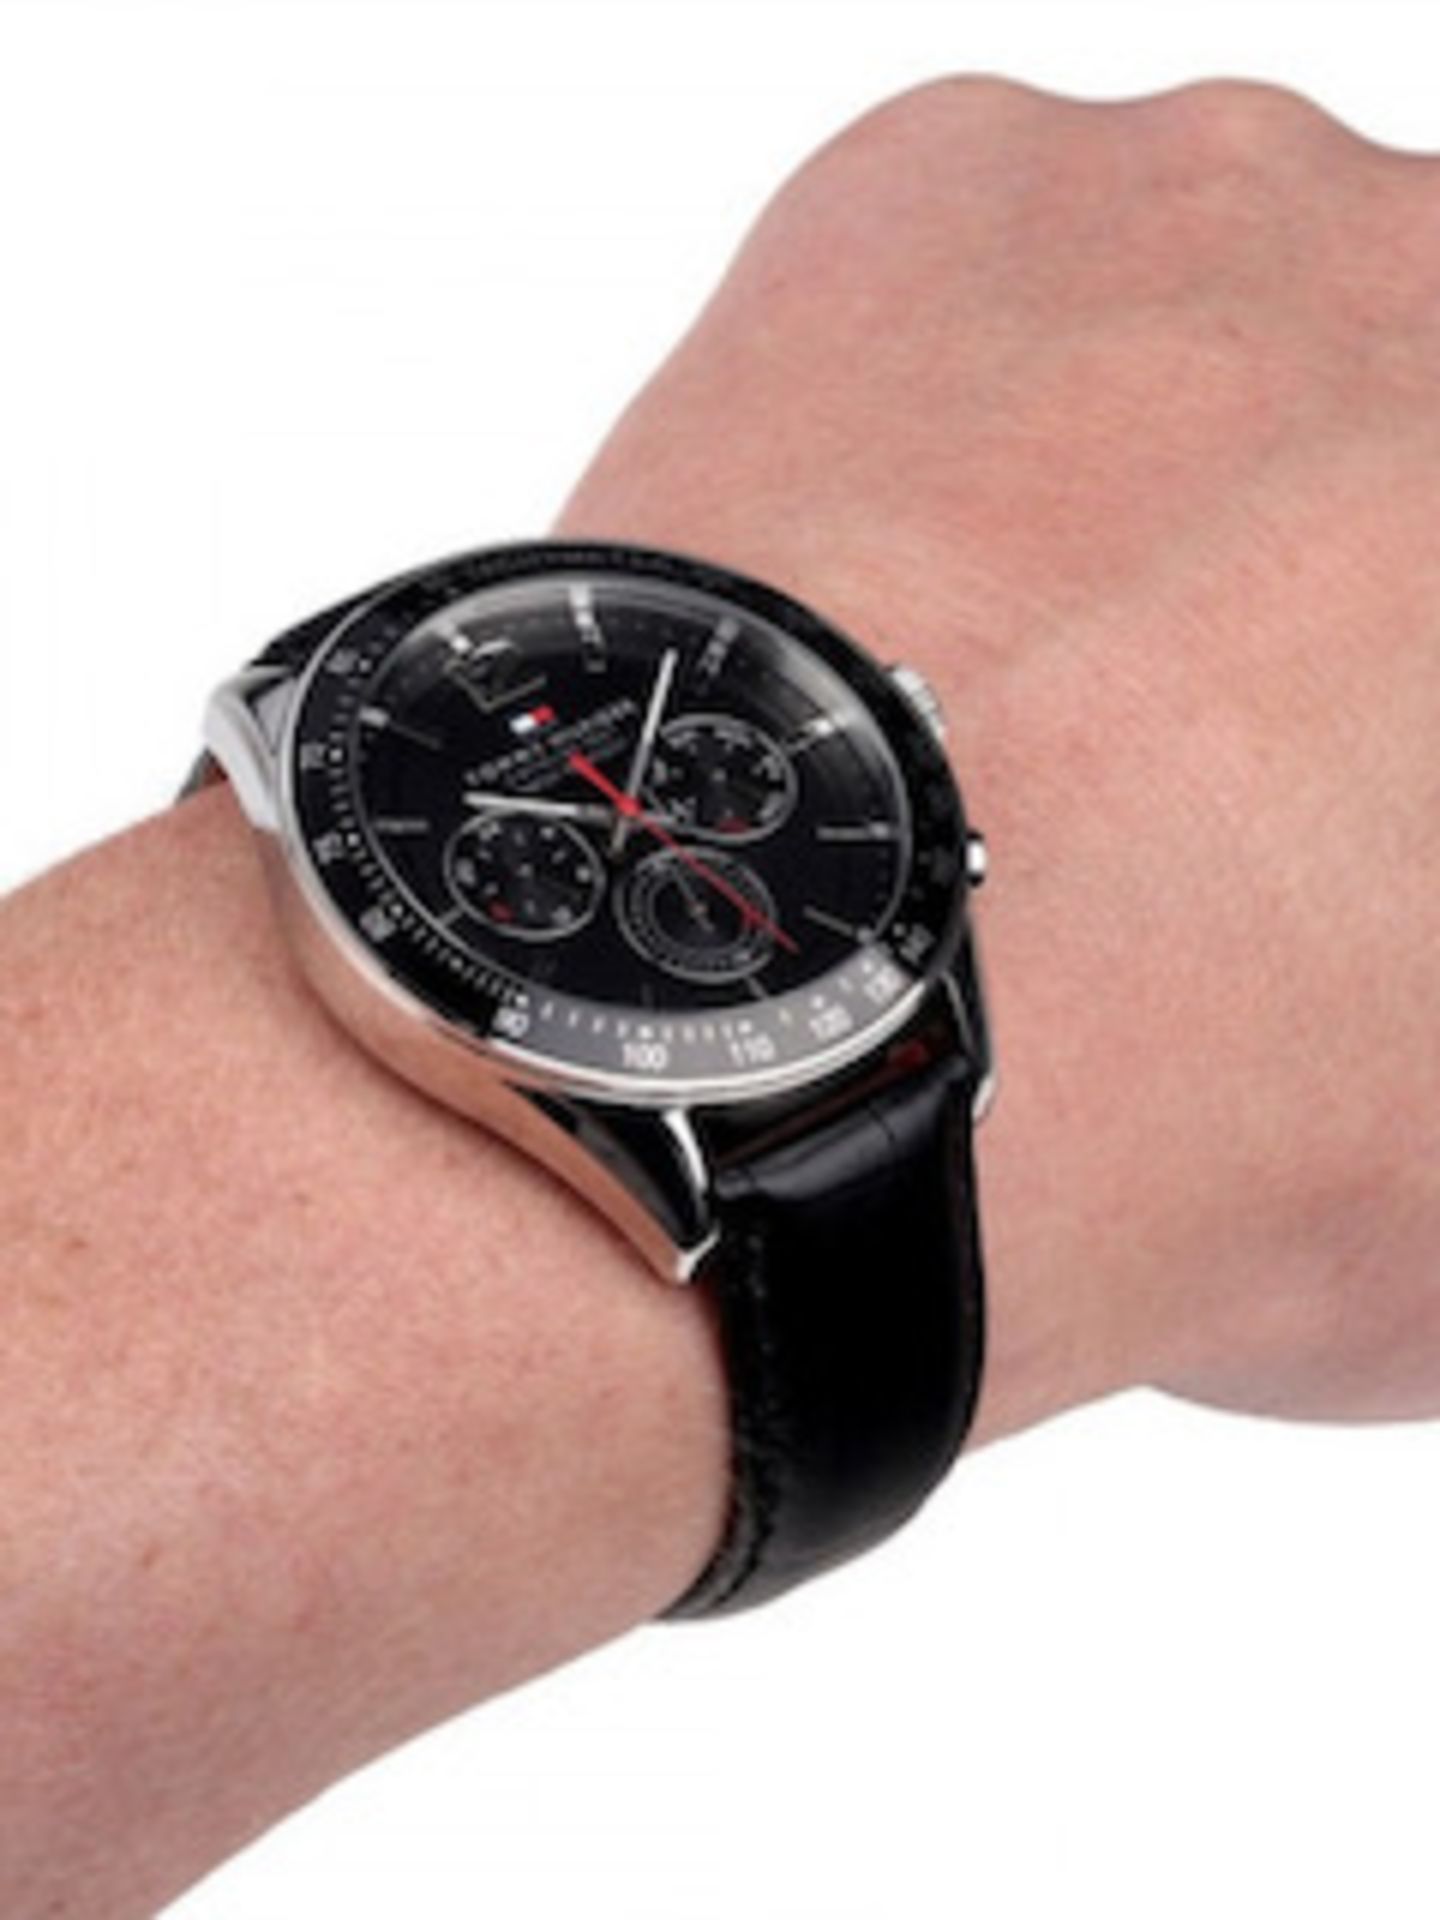 Tommy Hilfiger 1791117 Men's Black Dial Black Leather Watch - Image 6 of 8